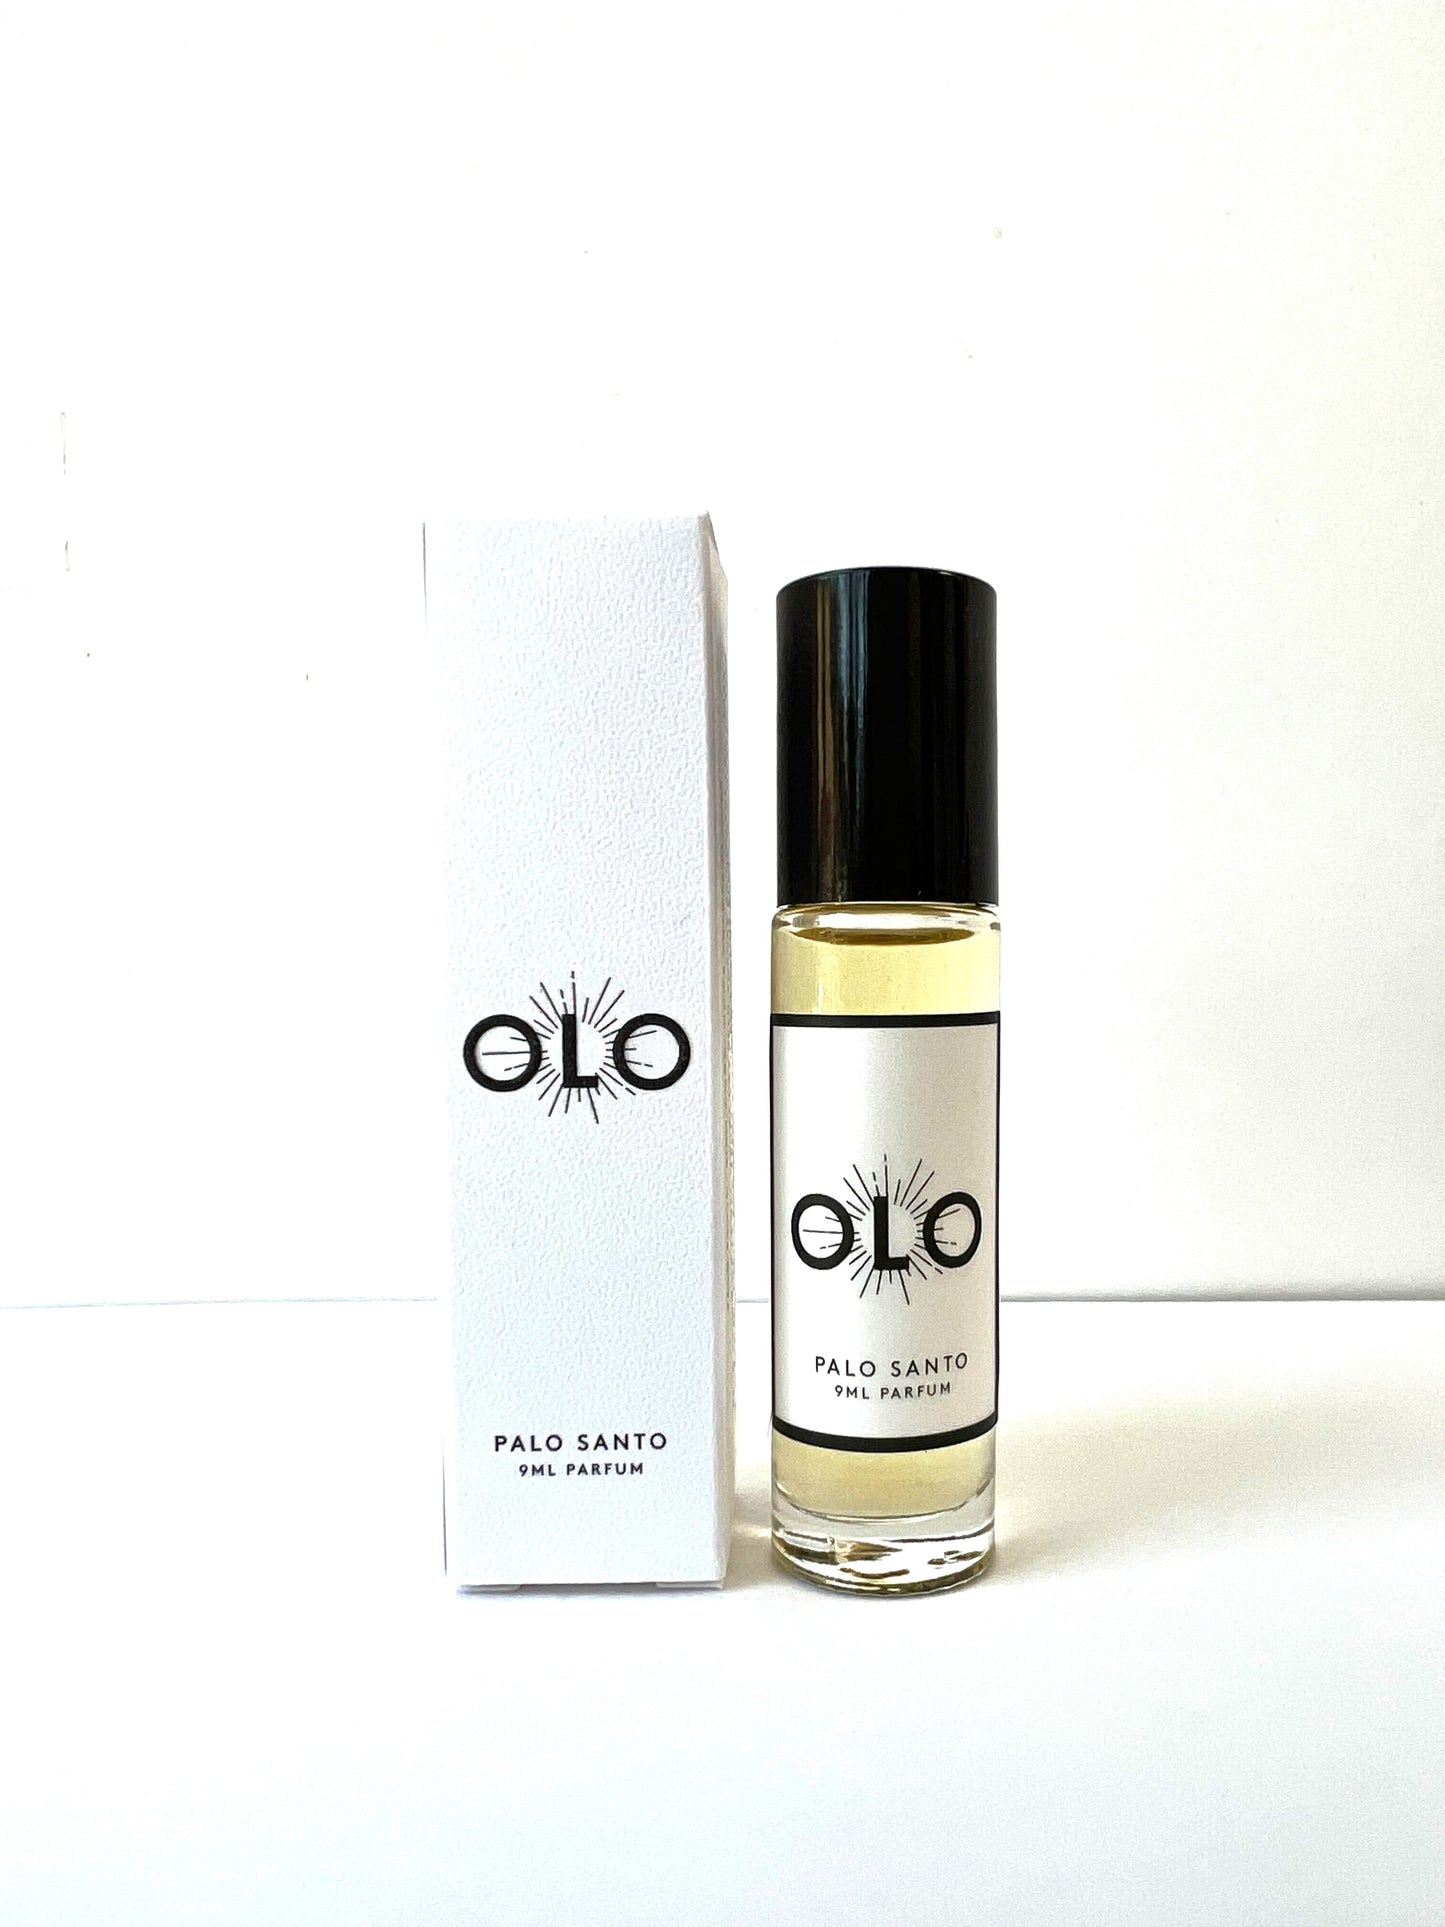 OLO - Palo Santo Perfume Roller